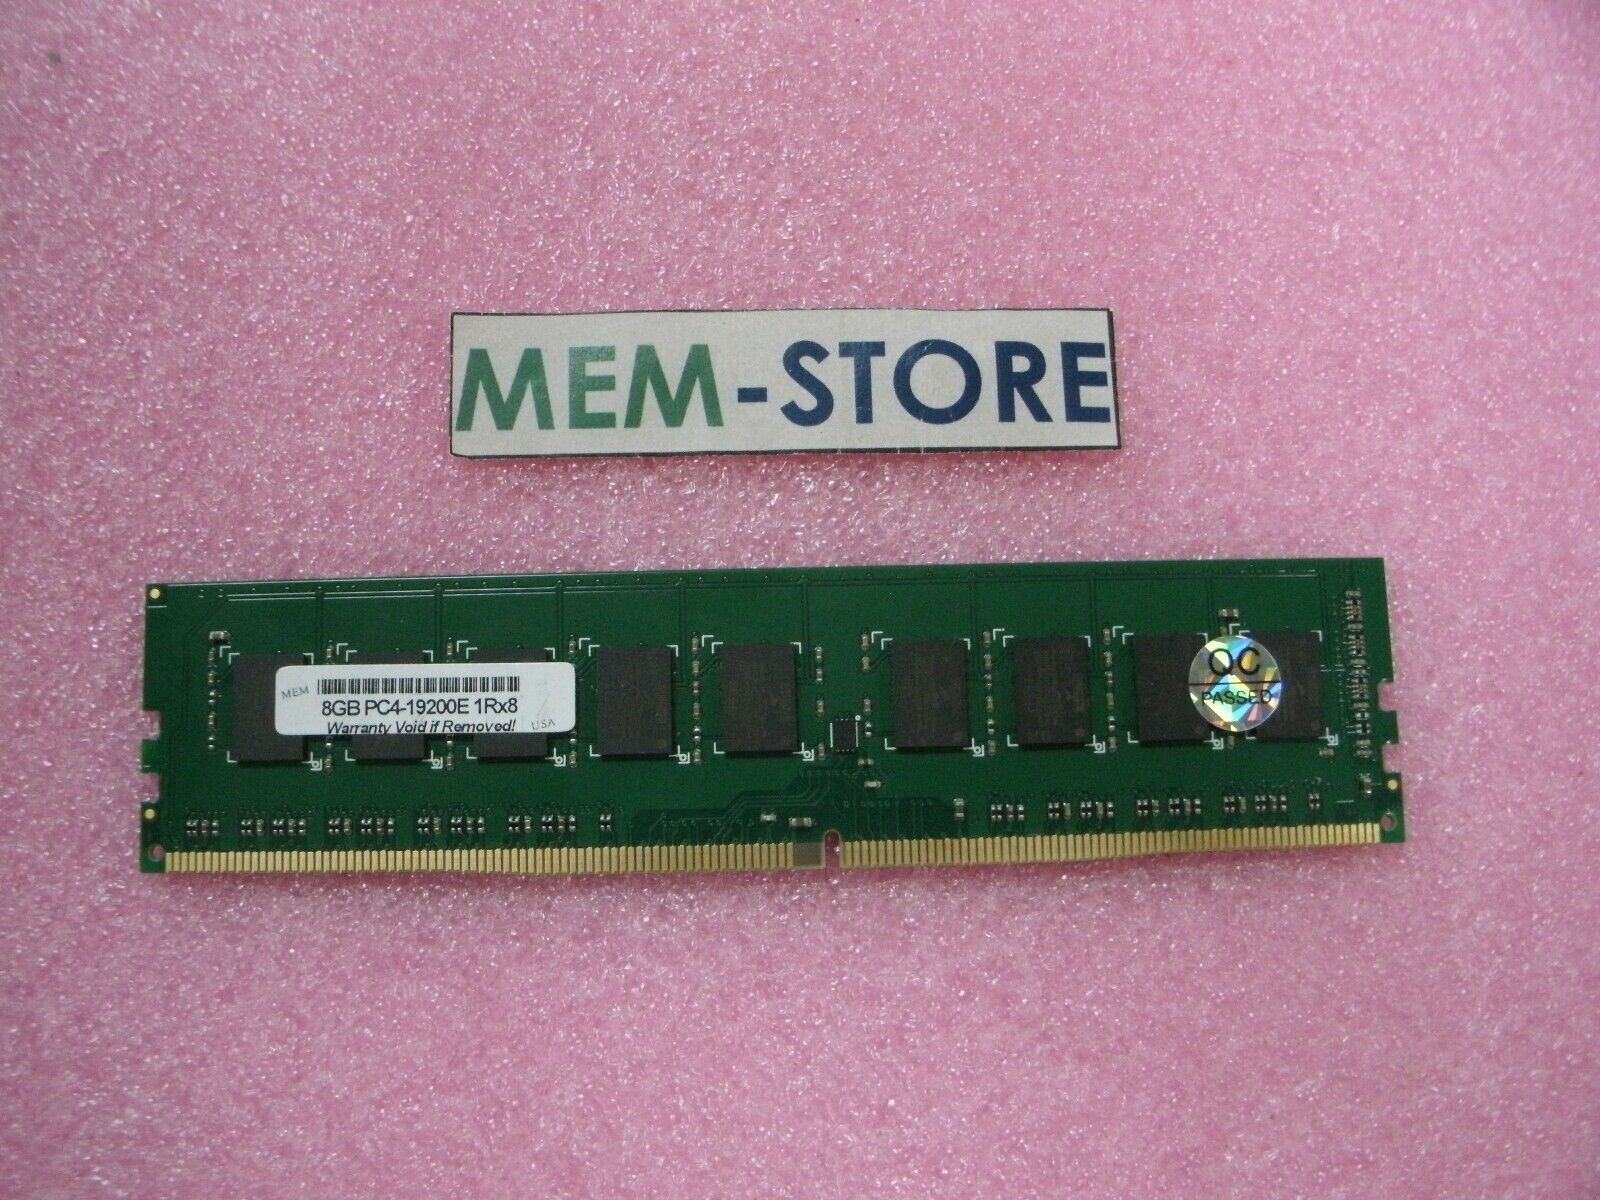 4X70P26062-MB 8GB DDR4 2400MHz ECC UDIMM RAM Memory Lenovo System x3250 M6 (3rd Party) - image 2 of 2